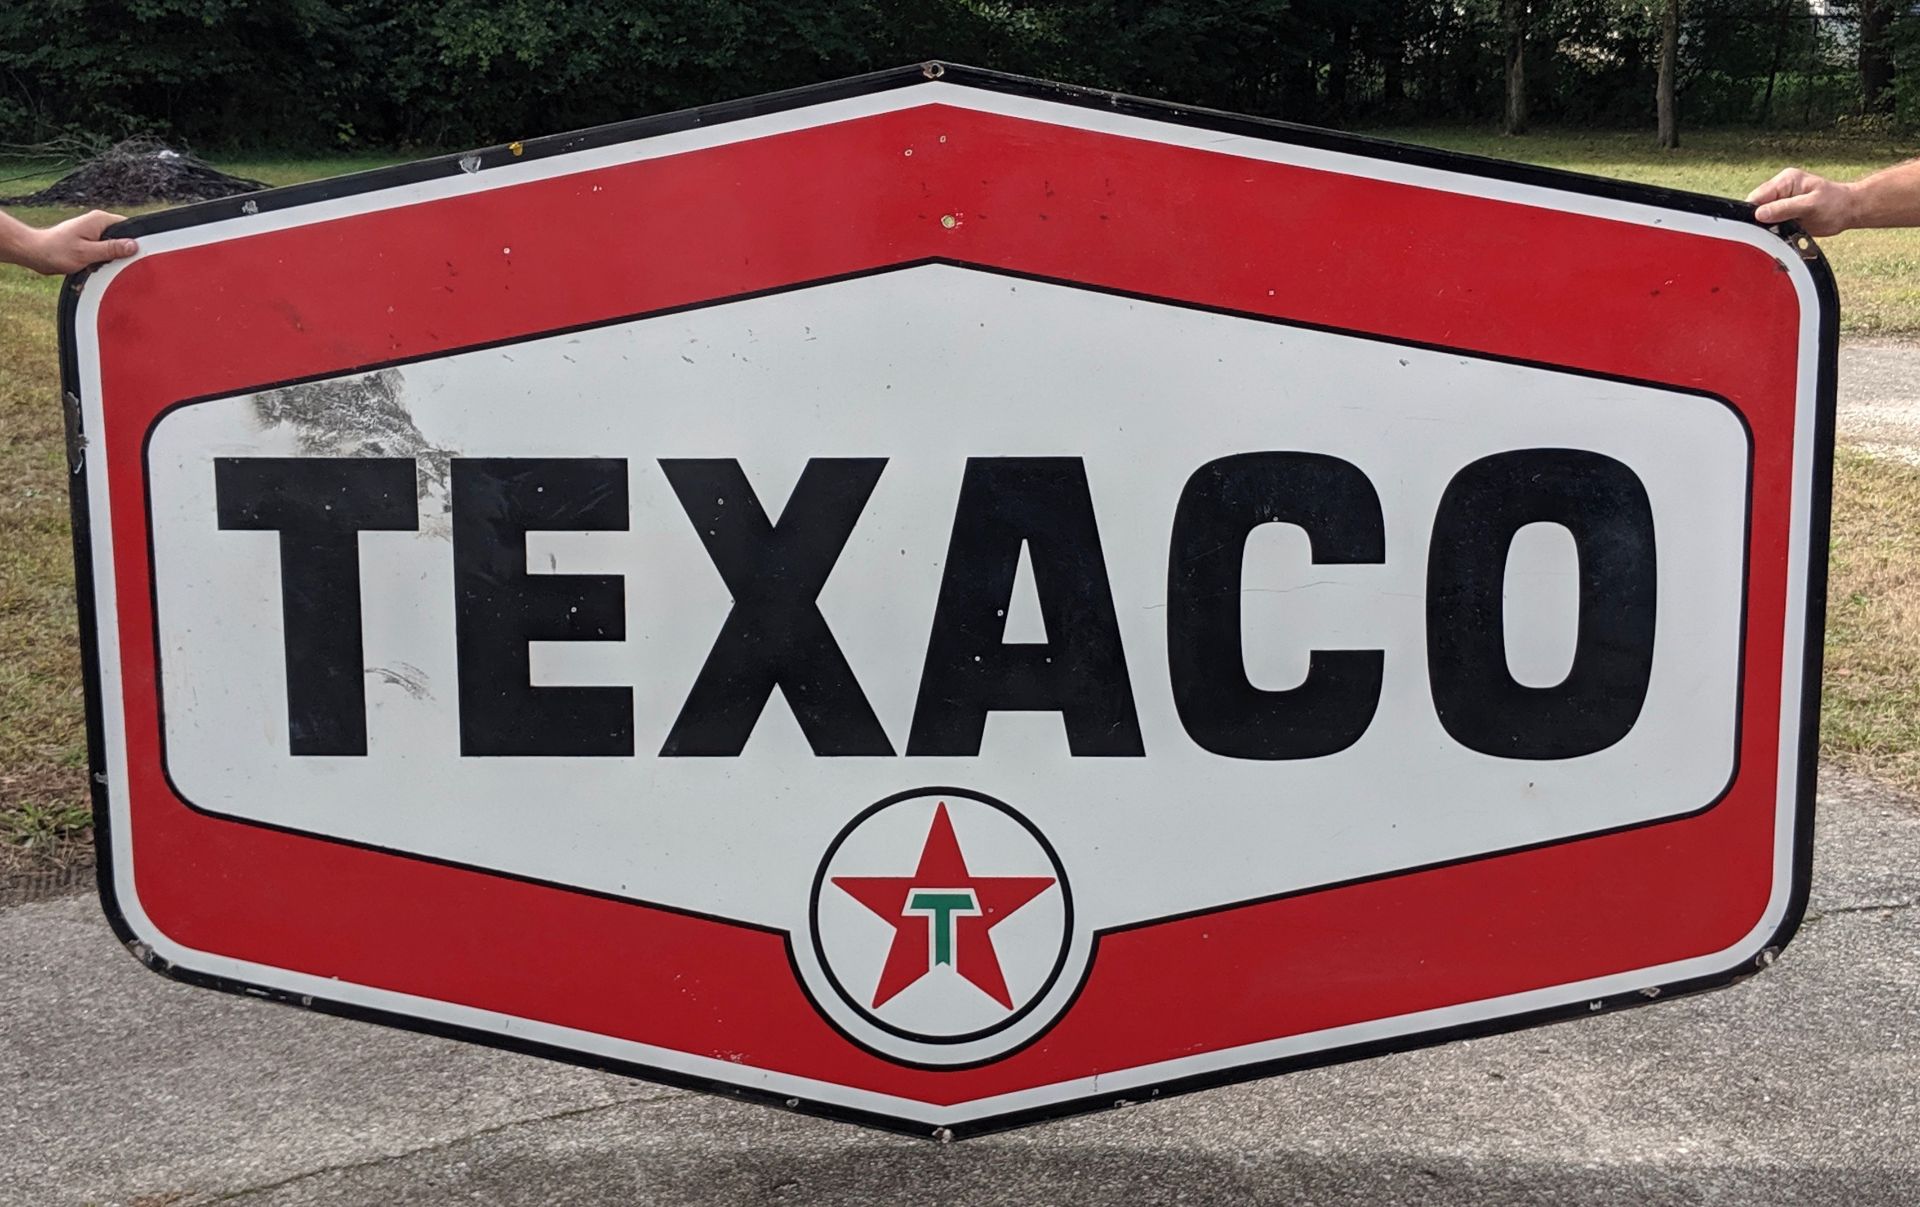 Large double sided porcelain Texaco service station sign 7' x 4.5' - Image 2 of 2